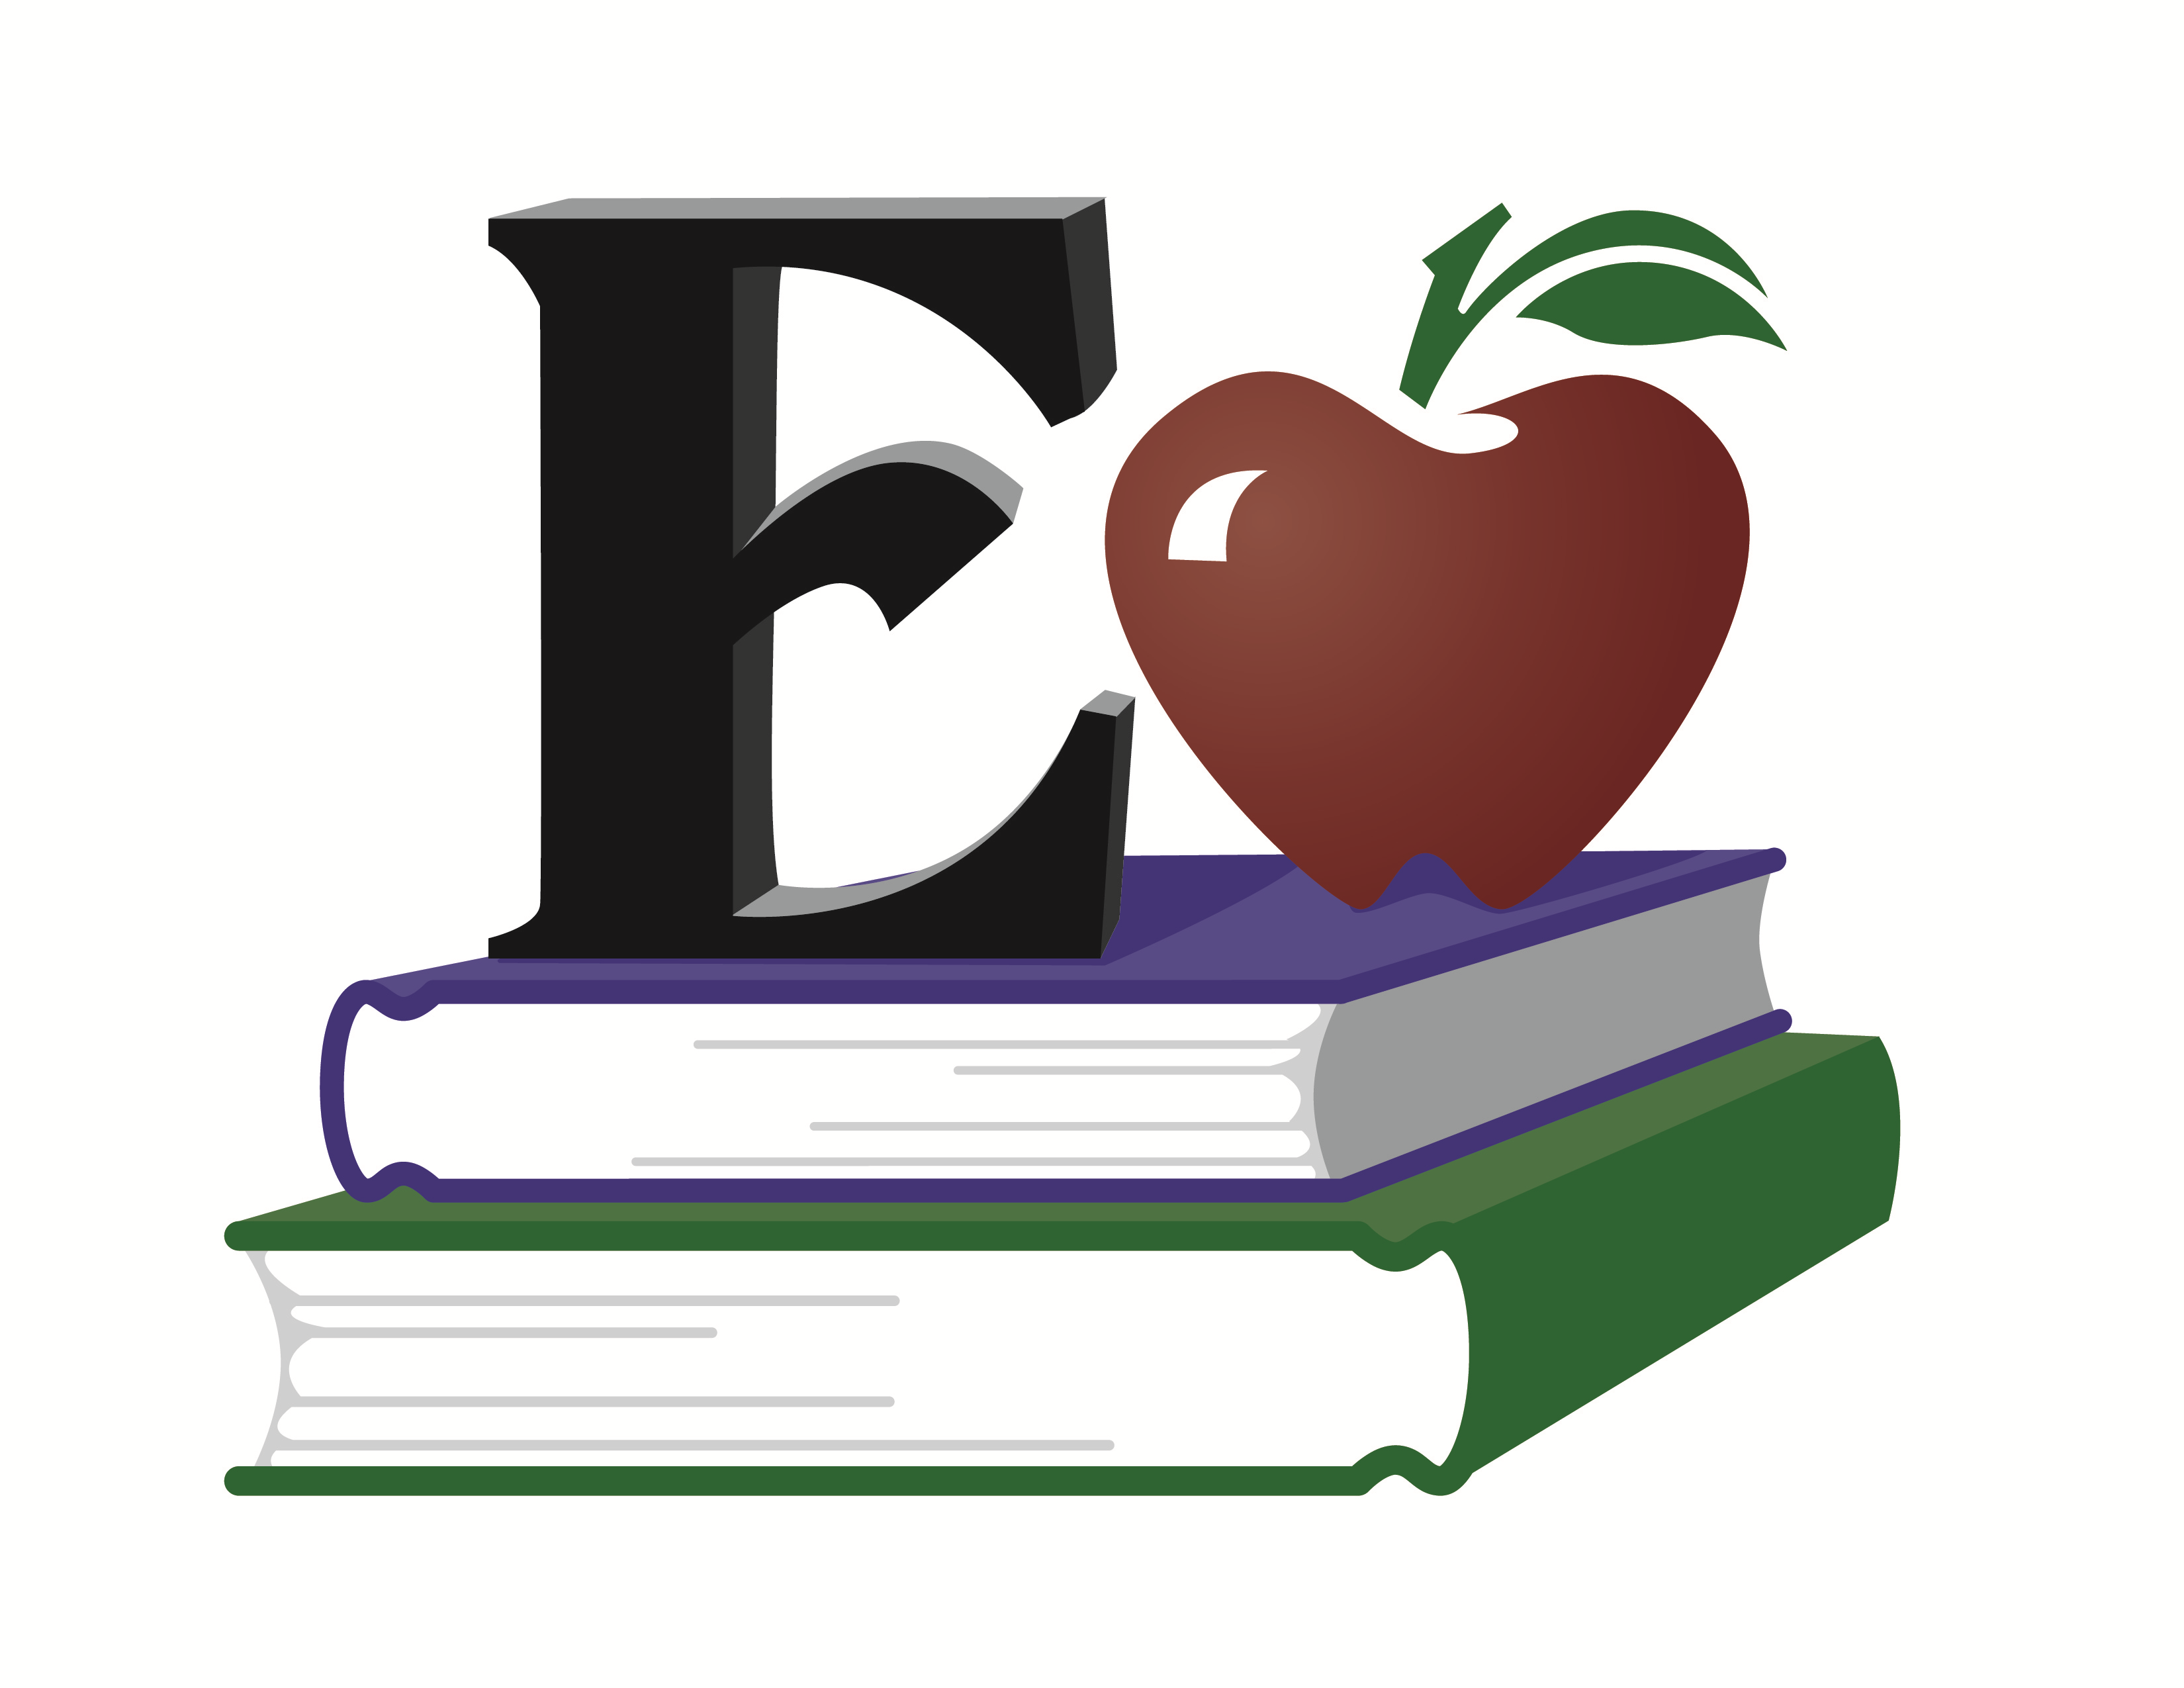 Edmond Public Schools logo